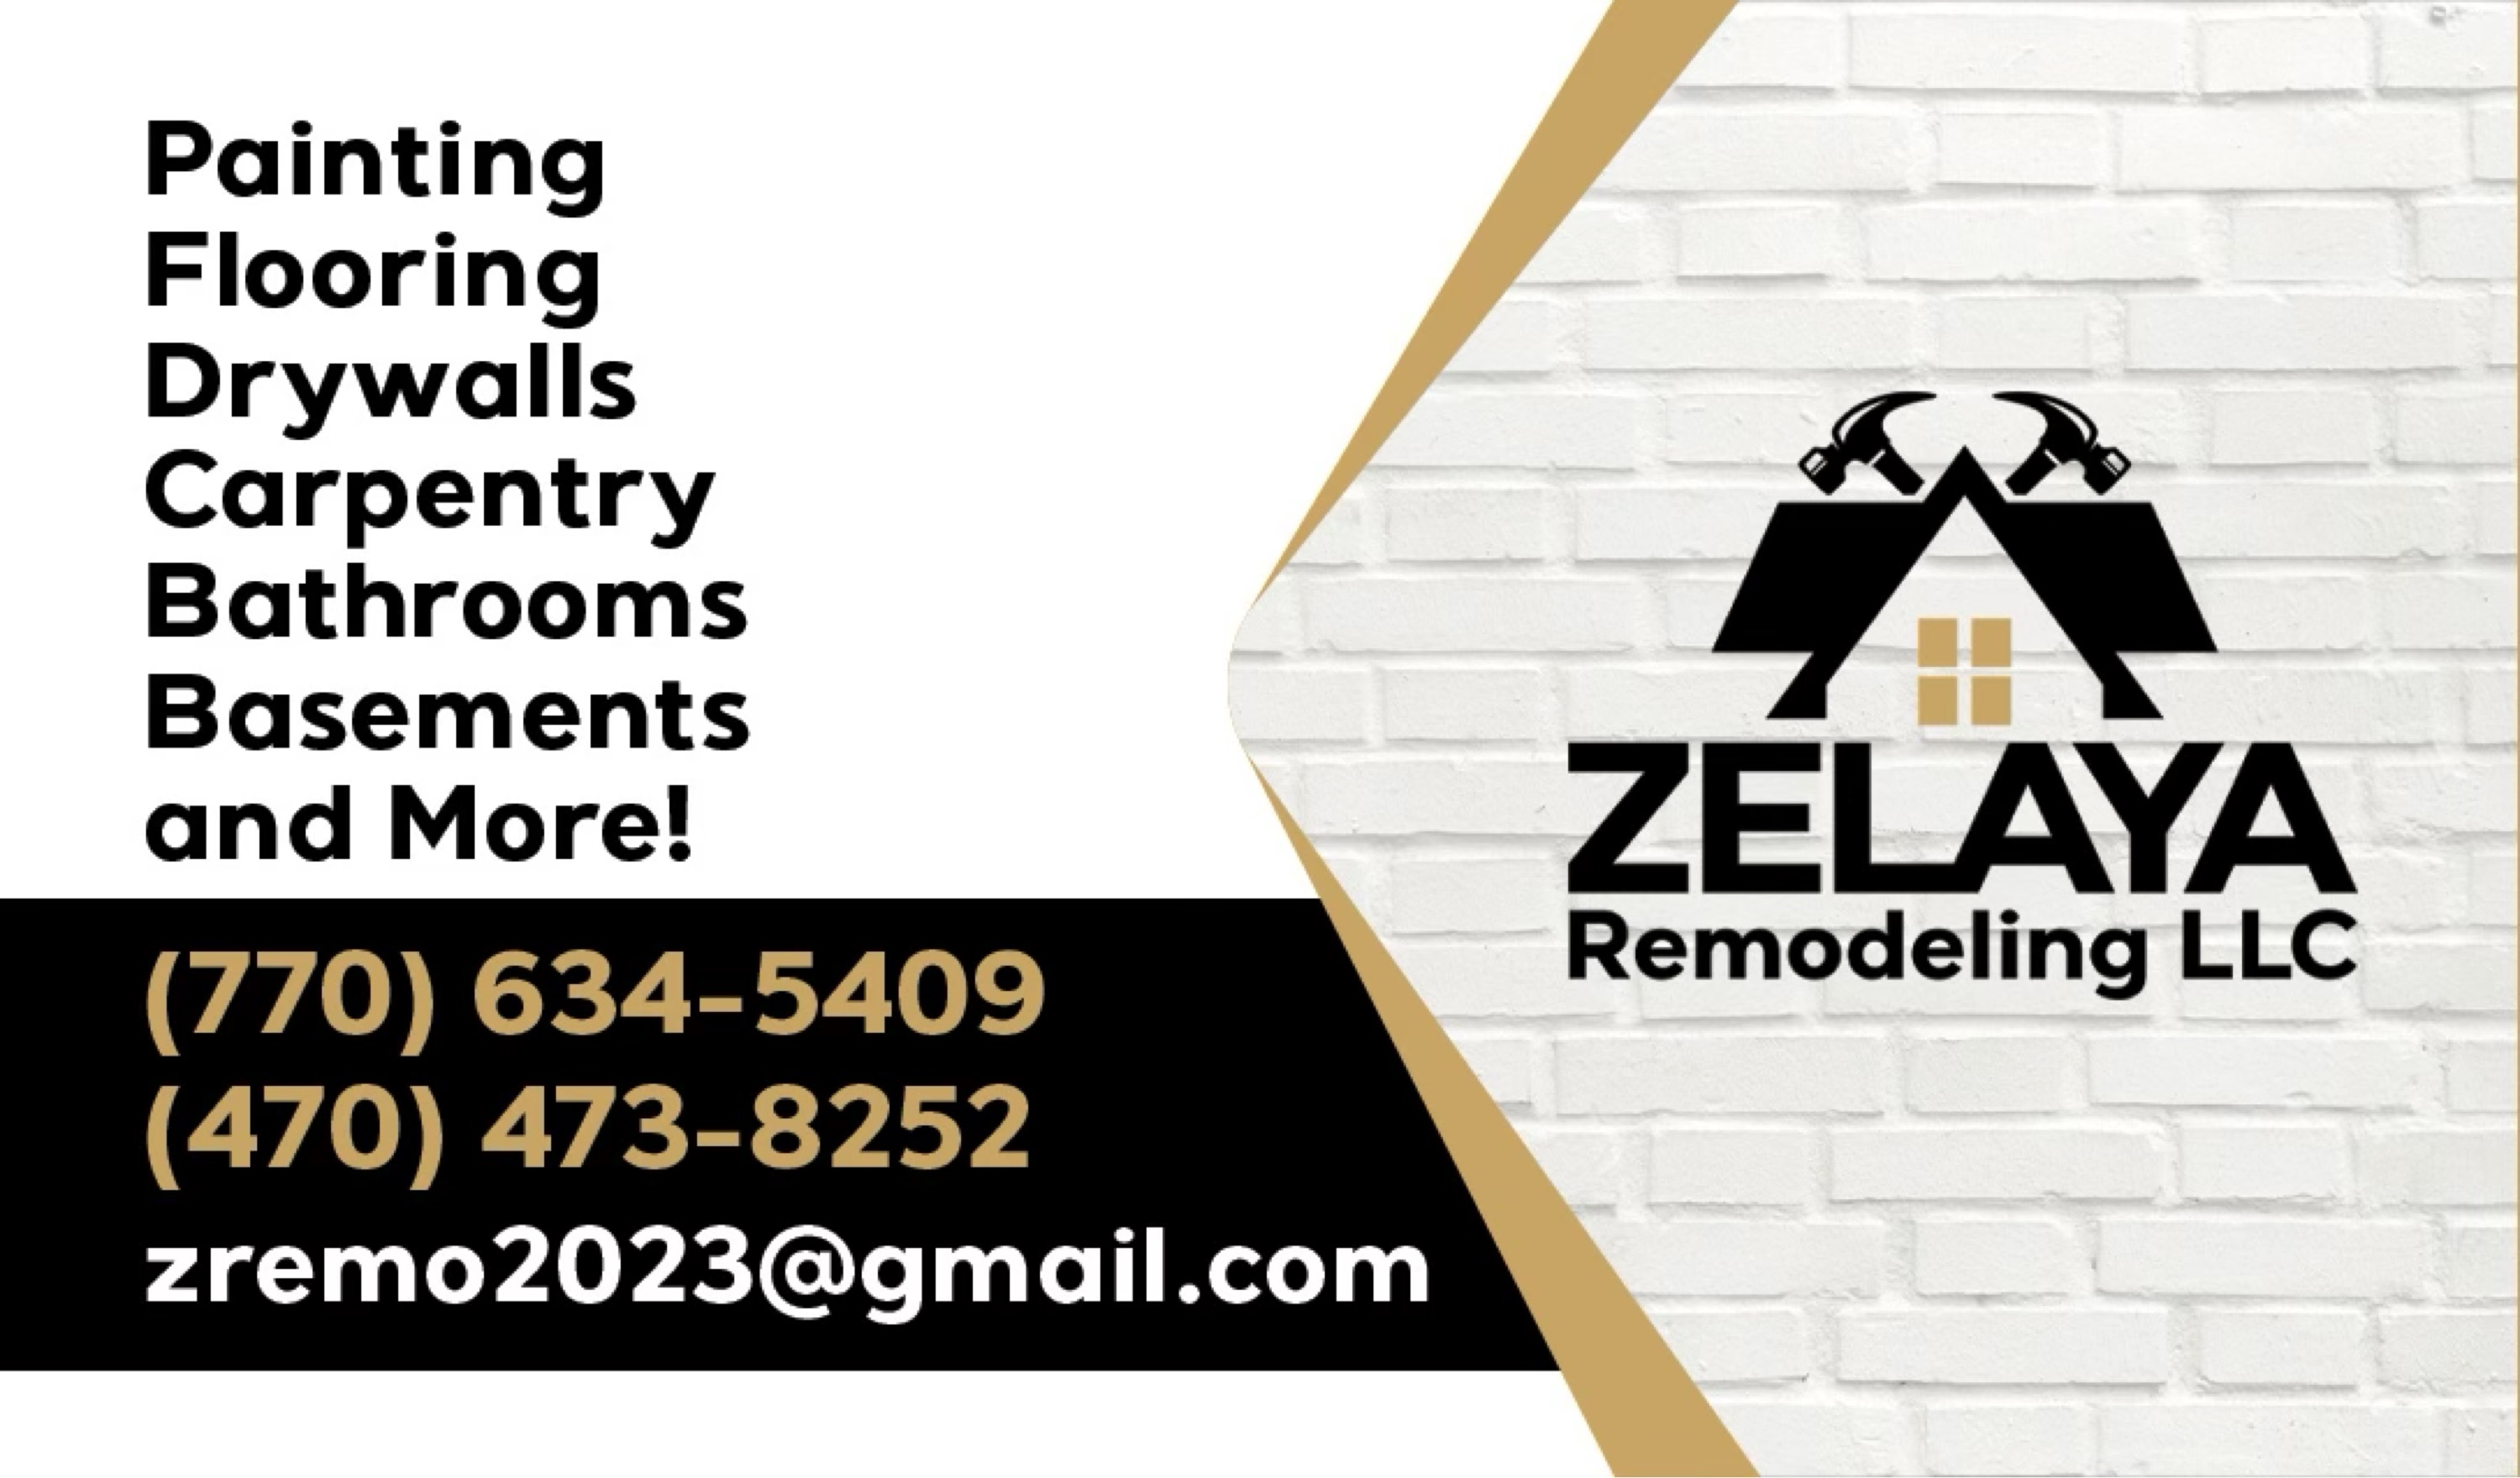 ZELAYA REMODELING LLC Logo